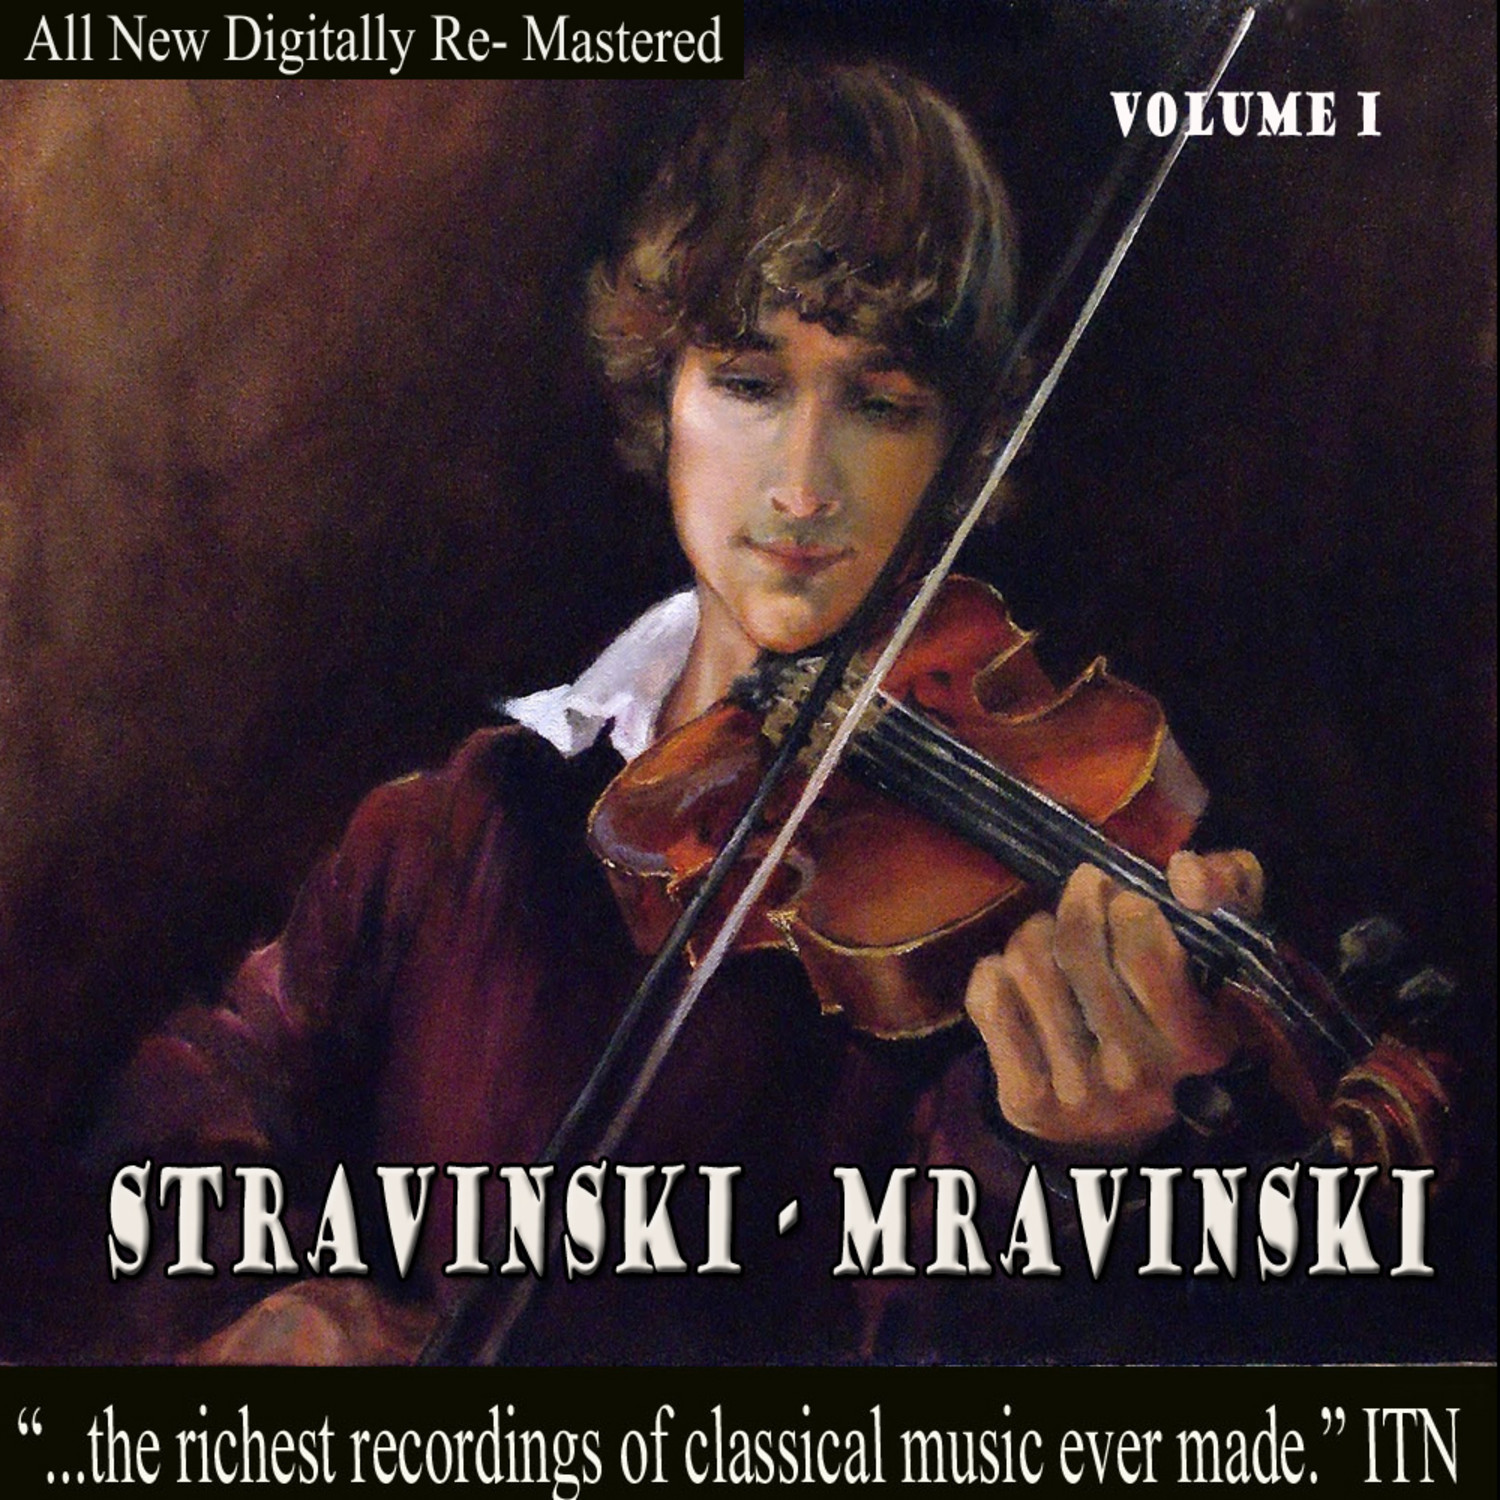 Stravinski - Mravinski Volume 1